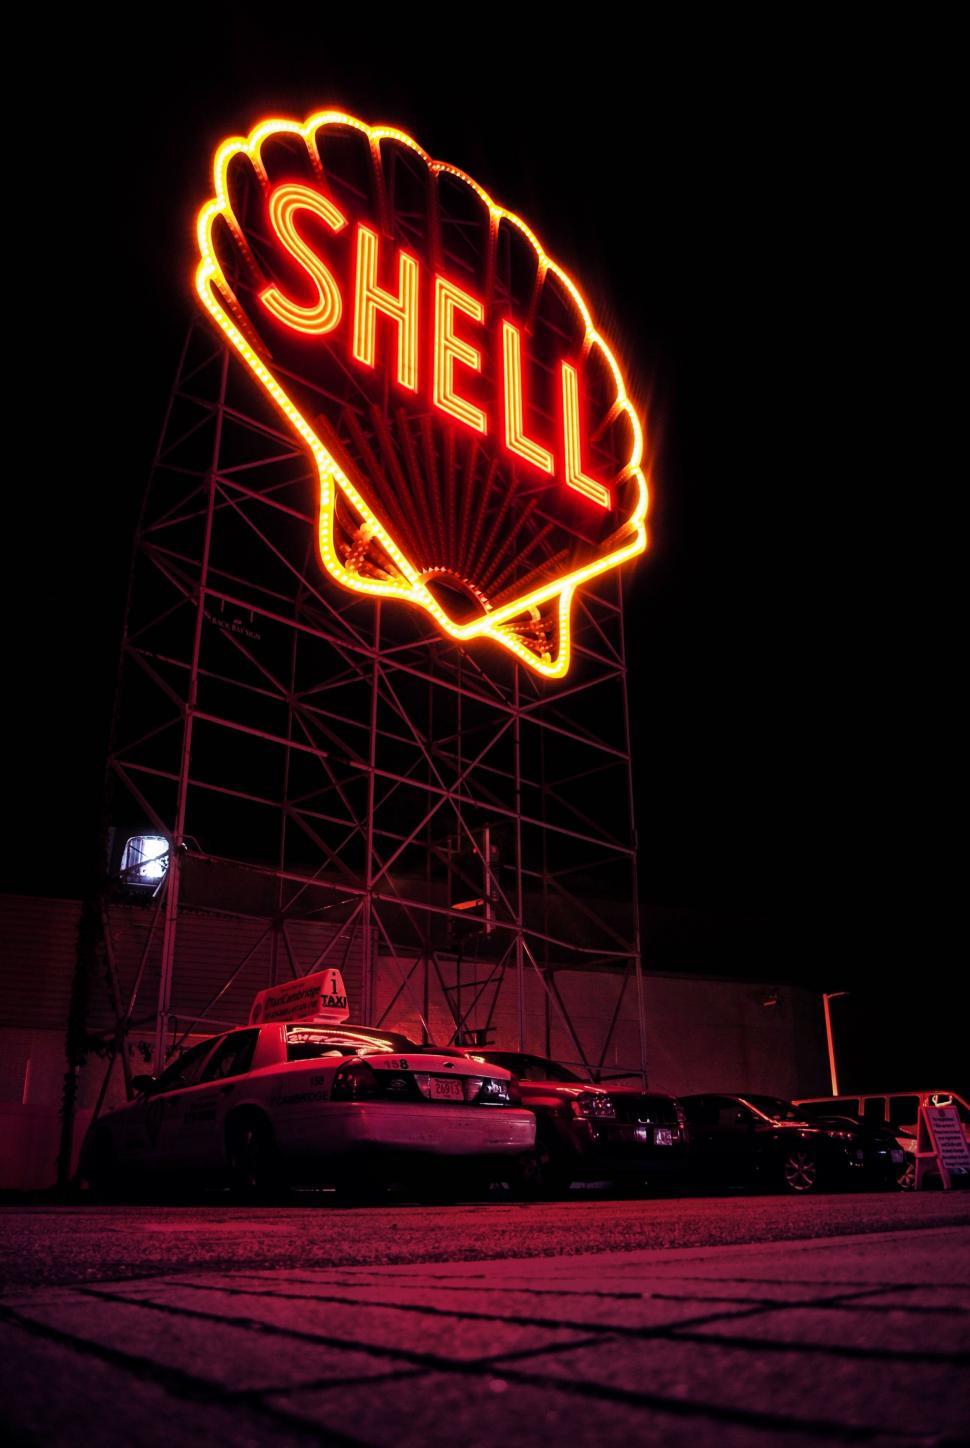 Free Image of Shell Gas Station Sign Illuminated at Night 